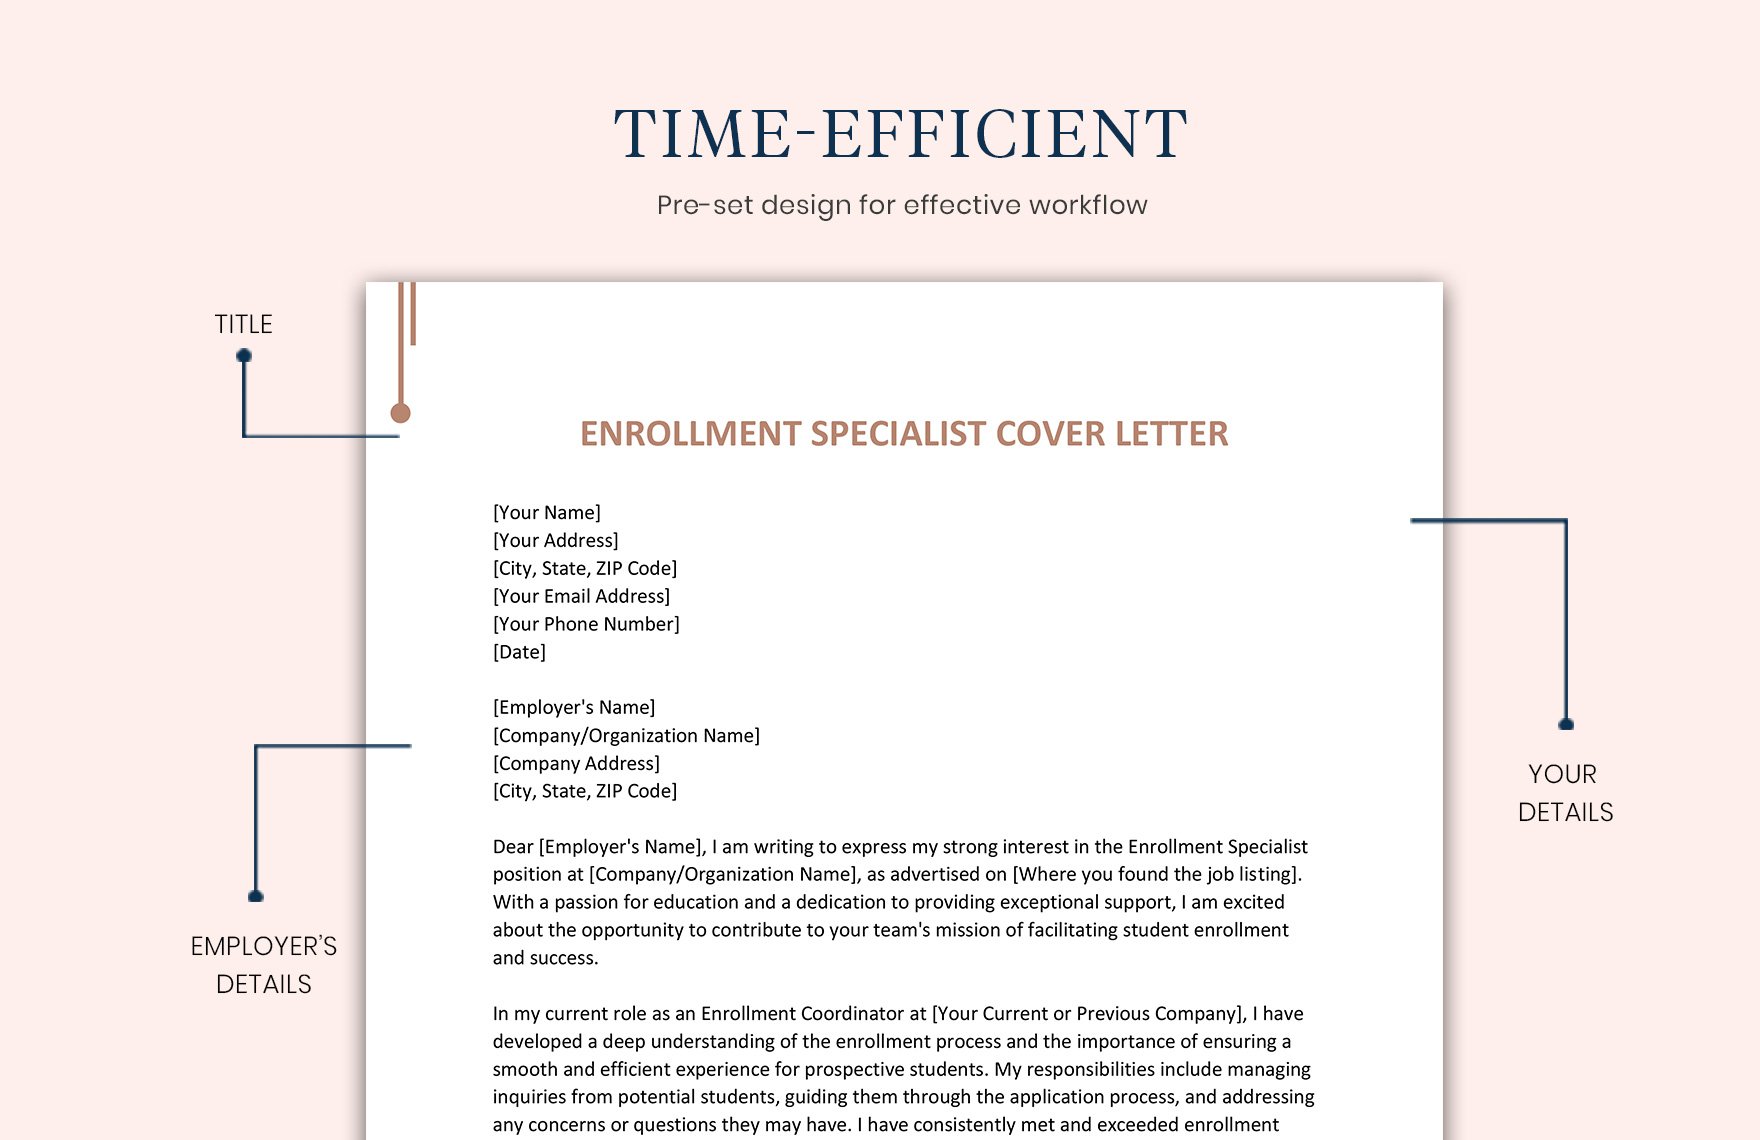 Enrollment Specialist Cover Letter